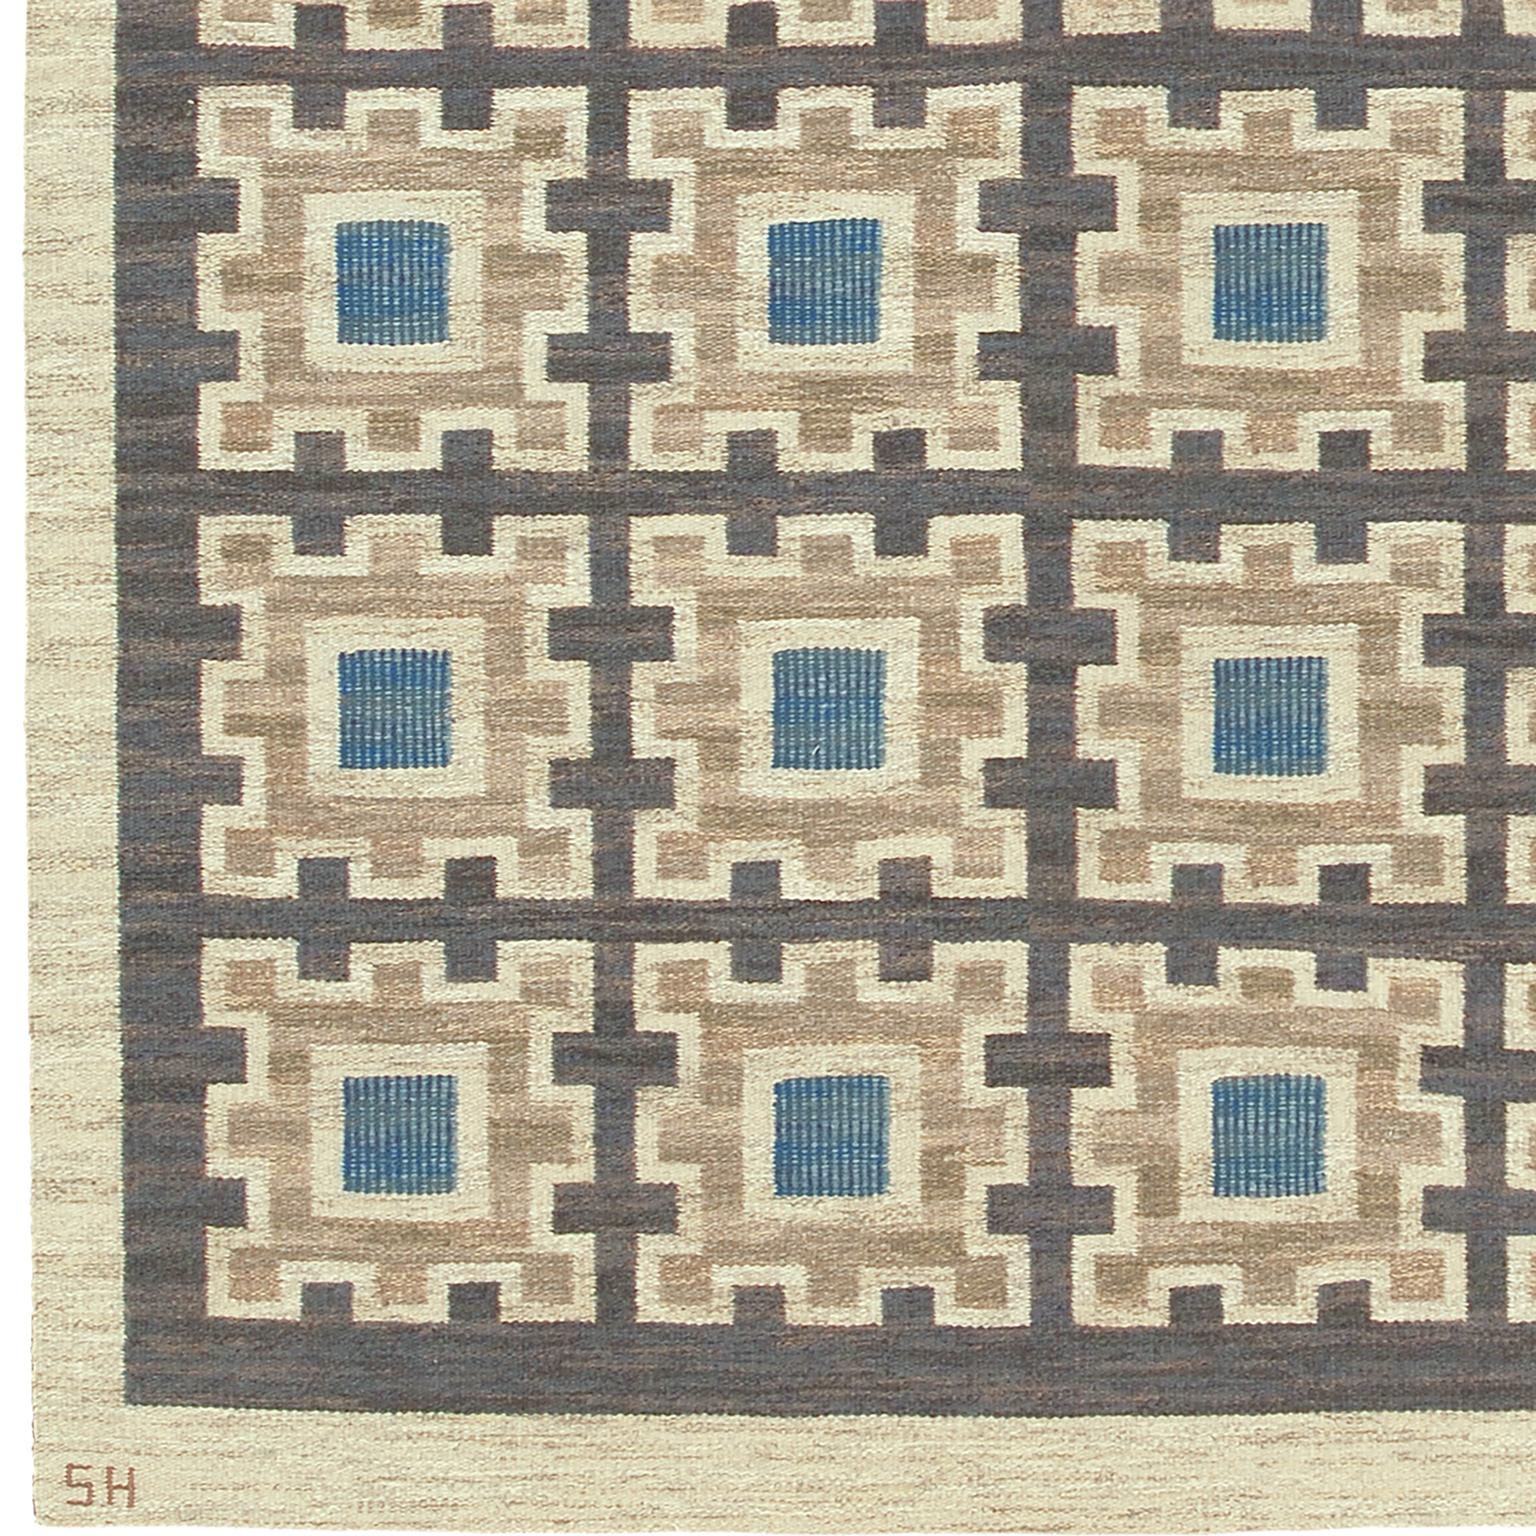 Swedish flat-weave rug by Edna Martin
Sweden circa 1950
Designed by: Edna Martin for Svensk Hemslöjd
Initialed: SH
Handwoven.
 